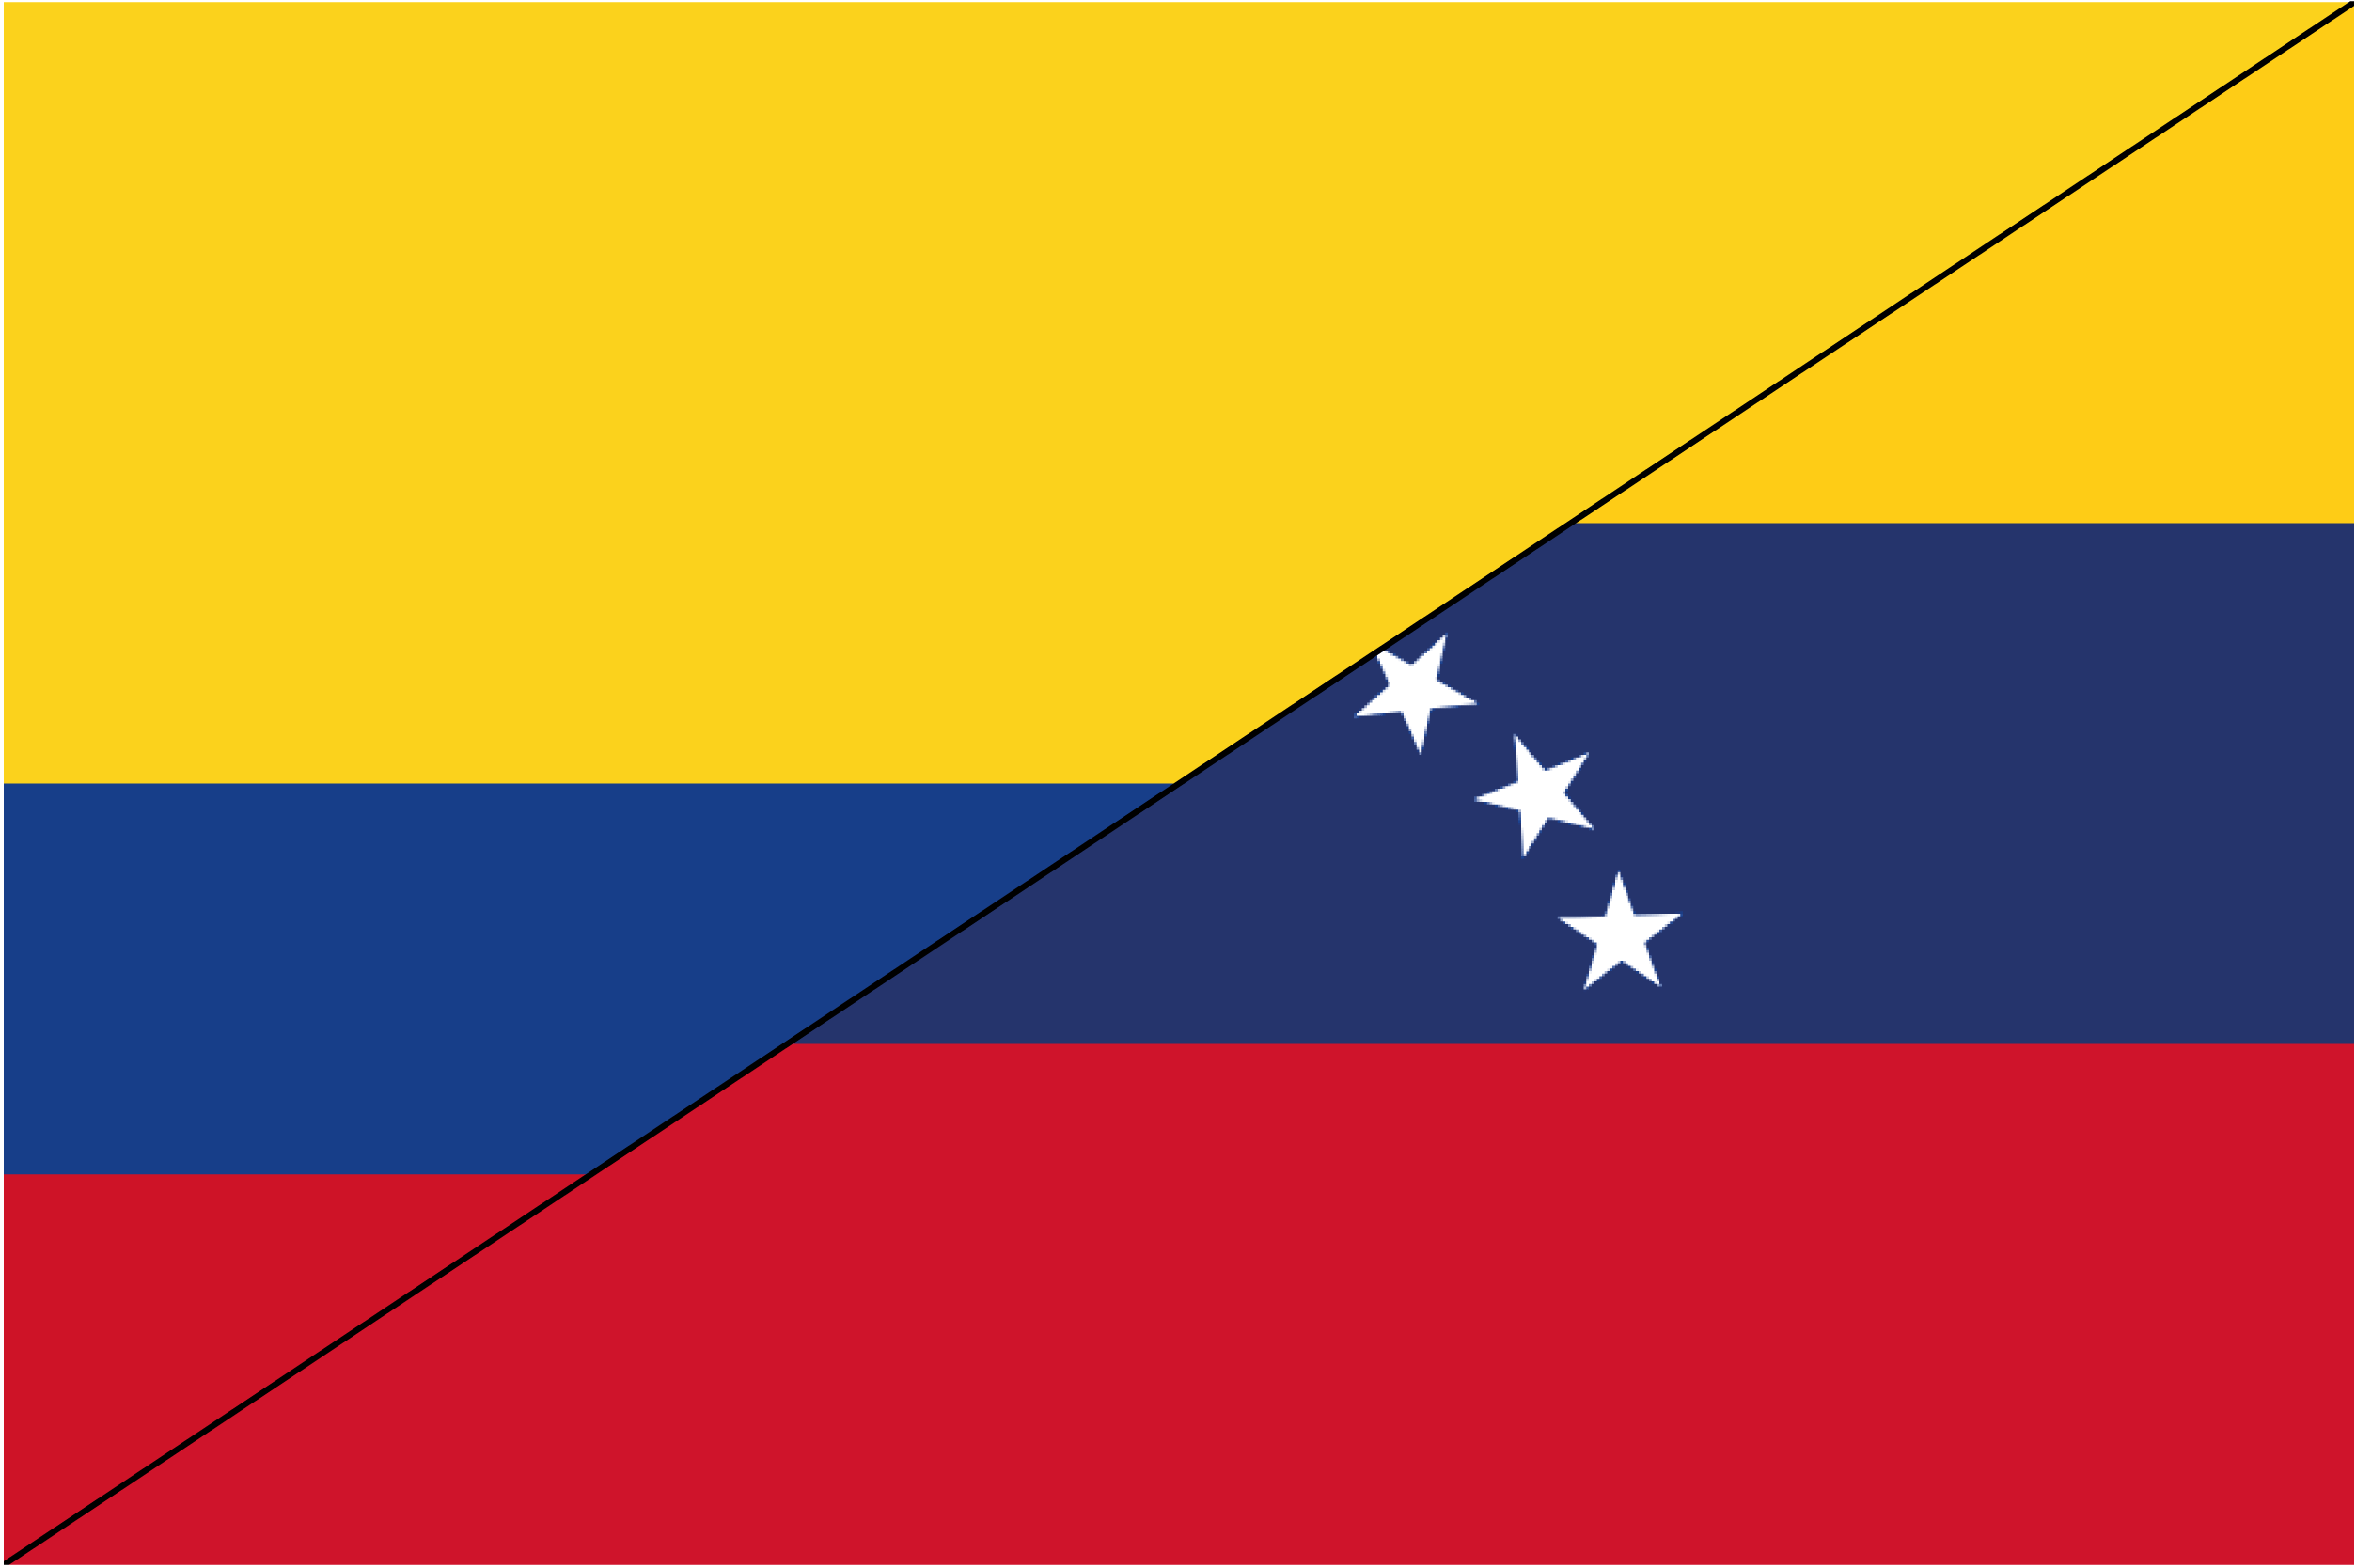 Colombia & Venezuela Restore Their Diplomatic Relations